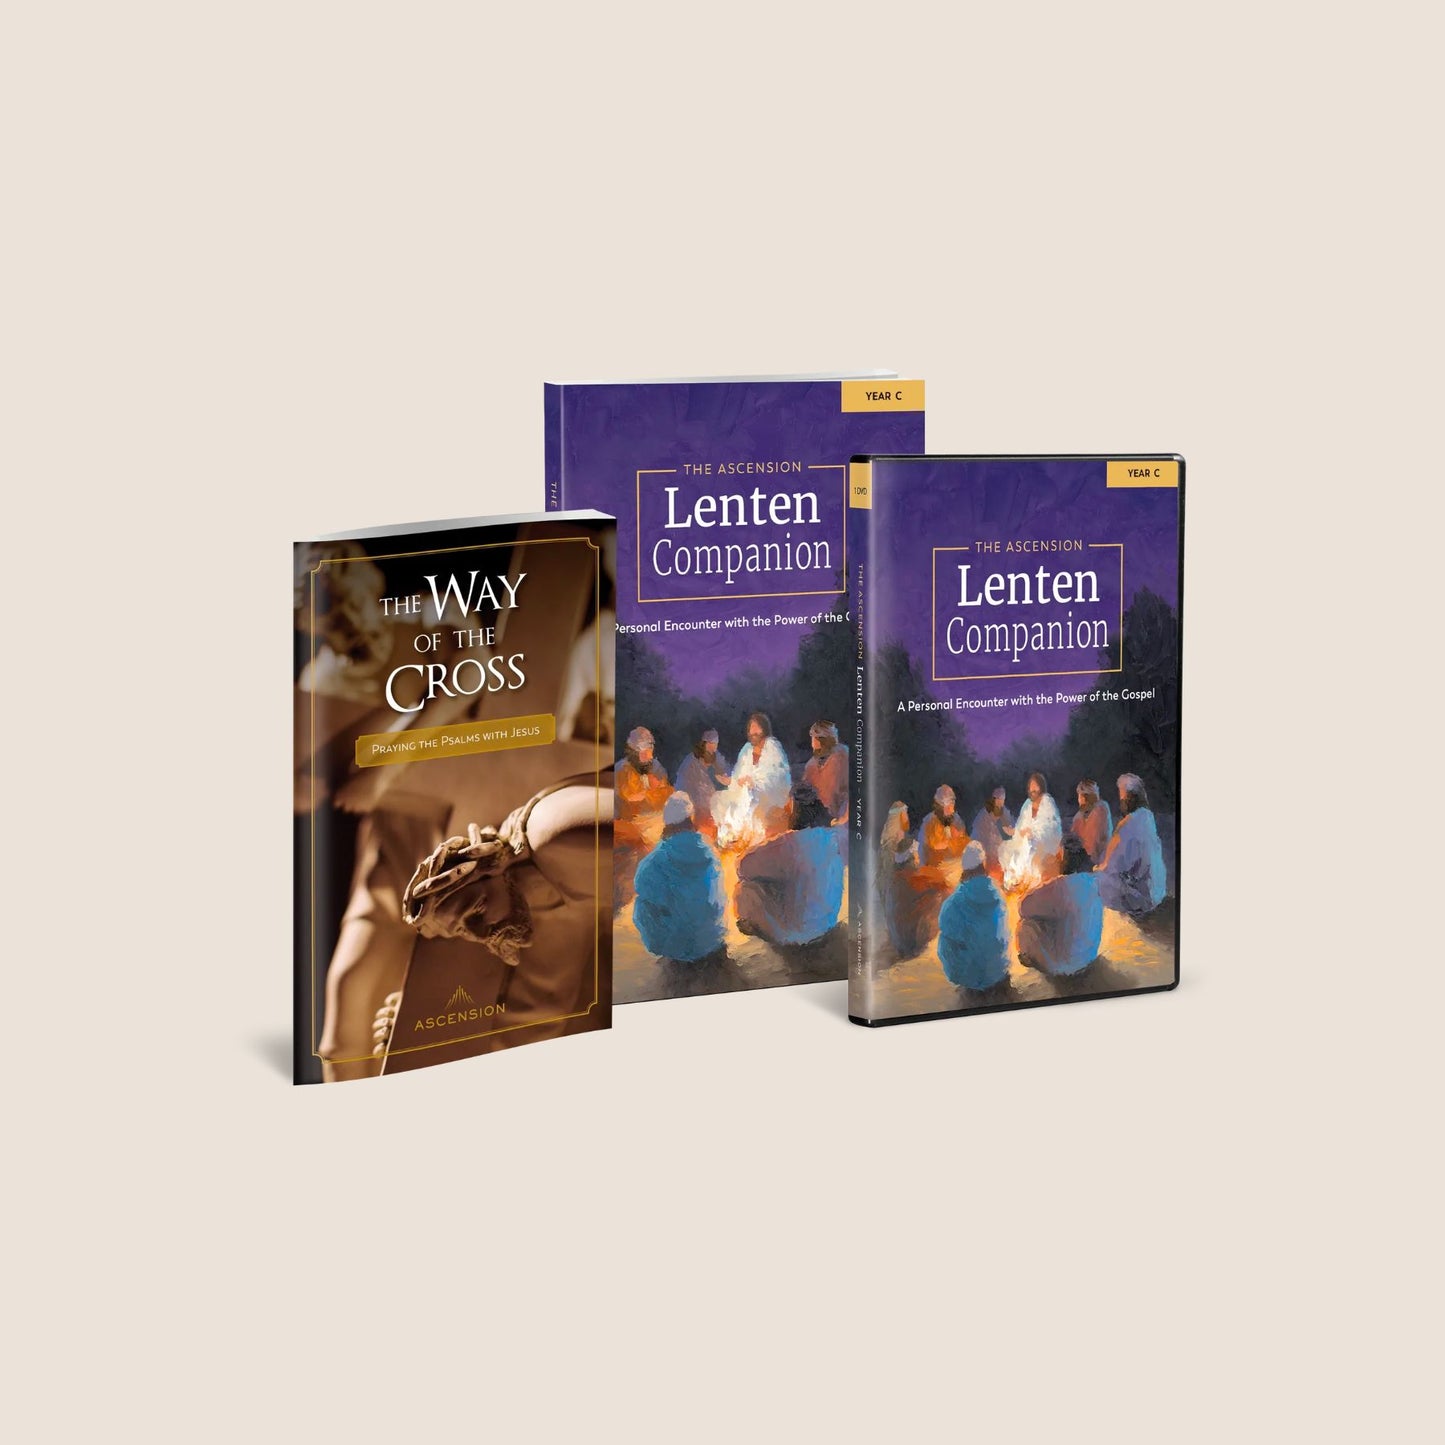 [PRE-ORDER] The Ascension Lenten Companion: Year C, Starter Pack